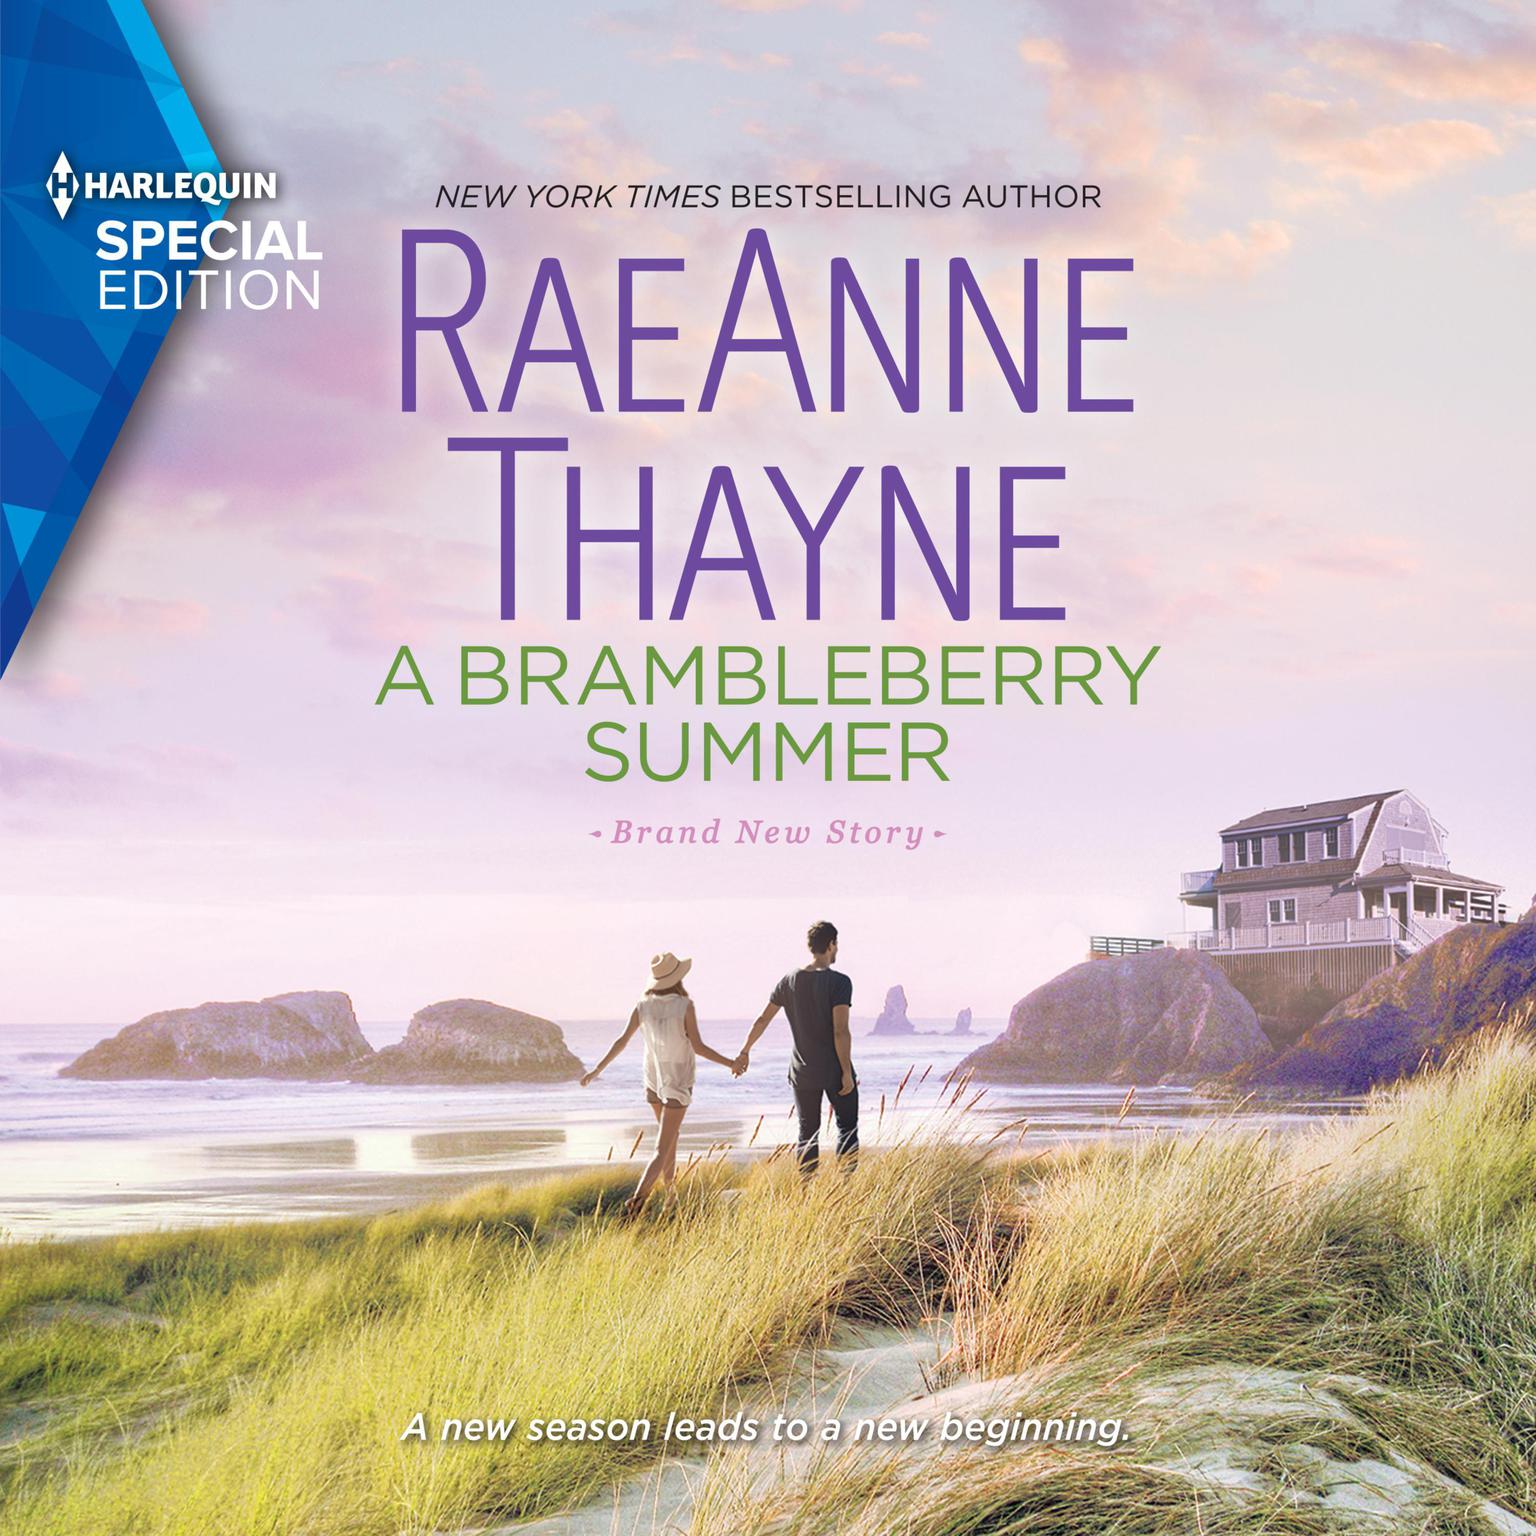 A Brambleberry Summer Audiobook, by RaeAnne Thayne